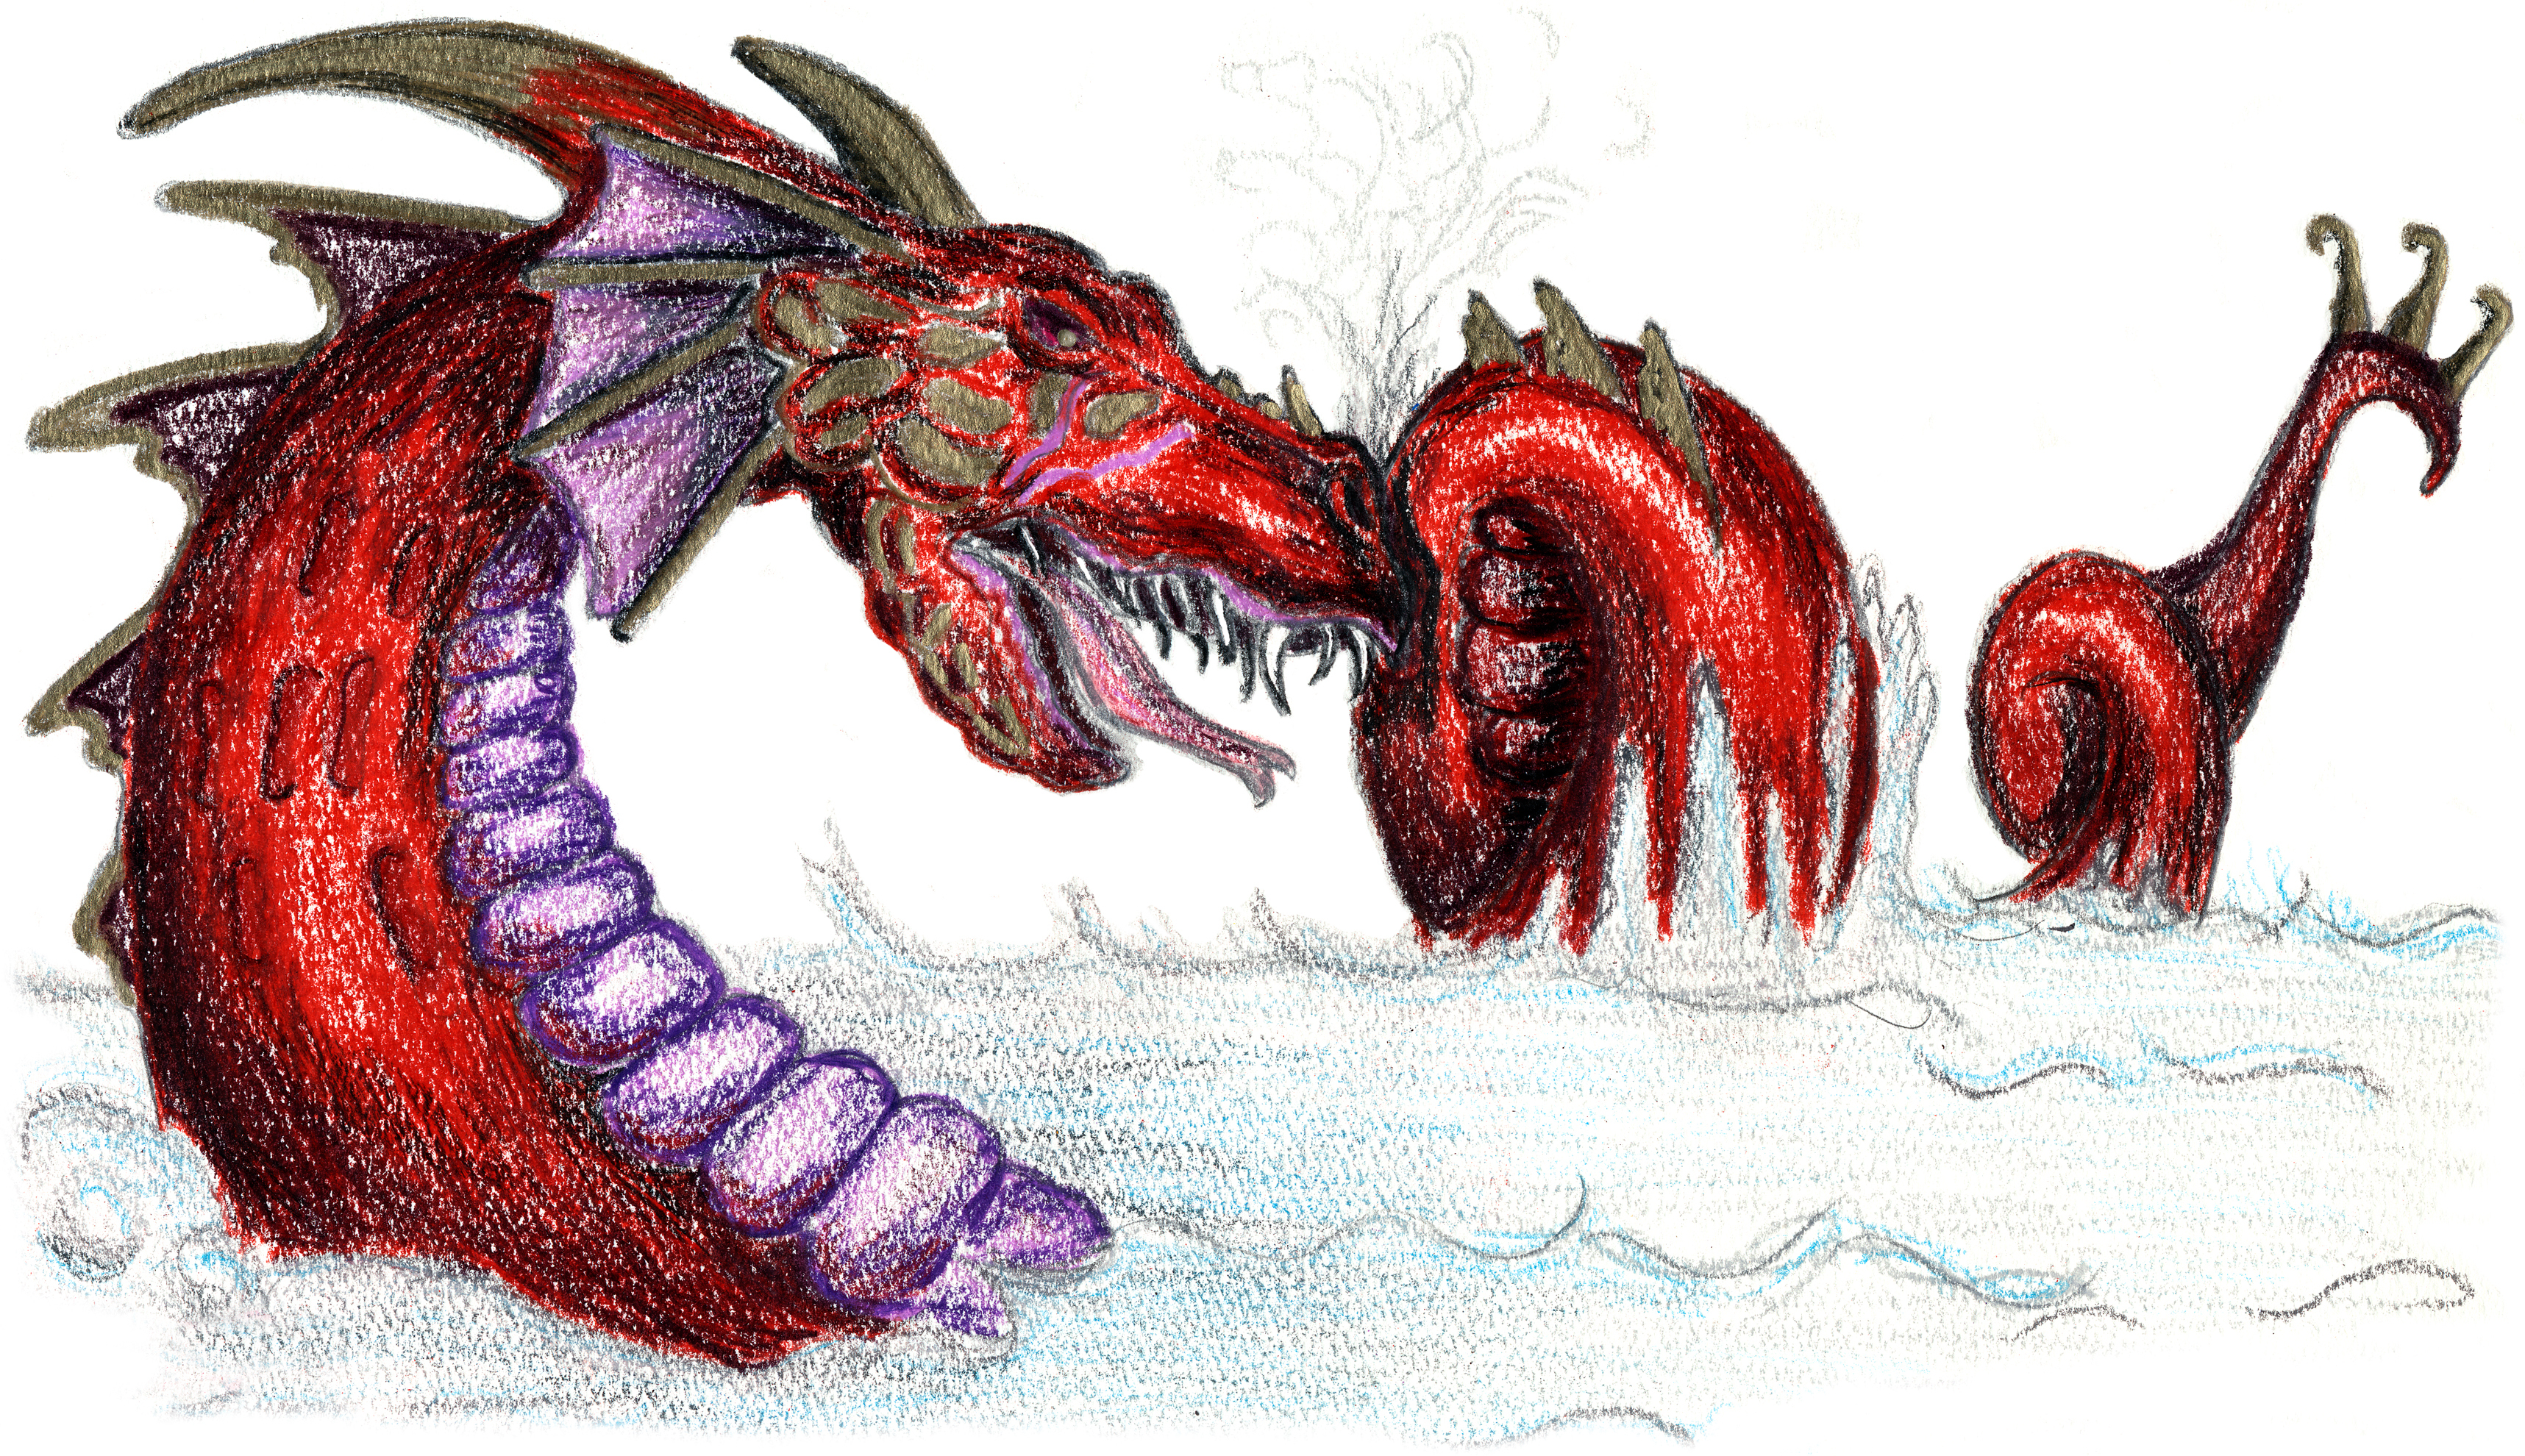 Red Sea Dragon drawing.jpg